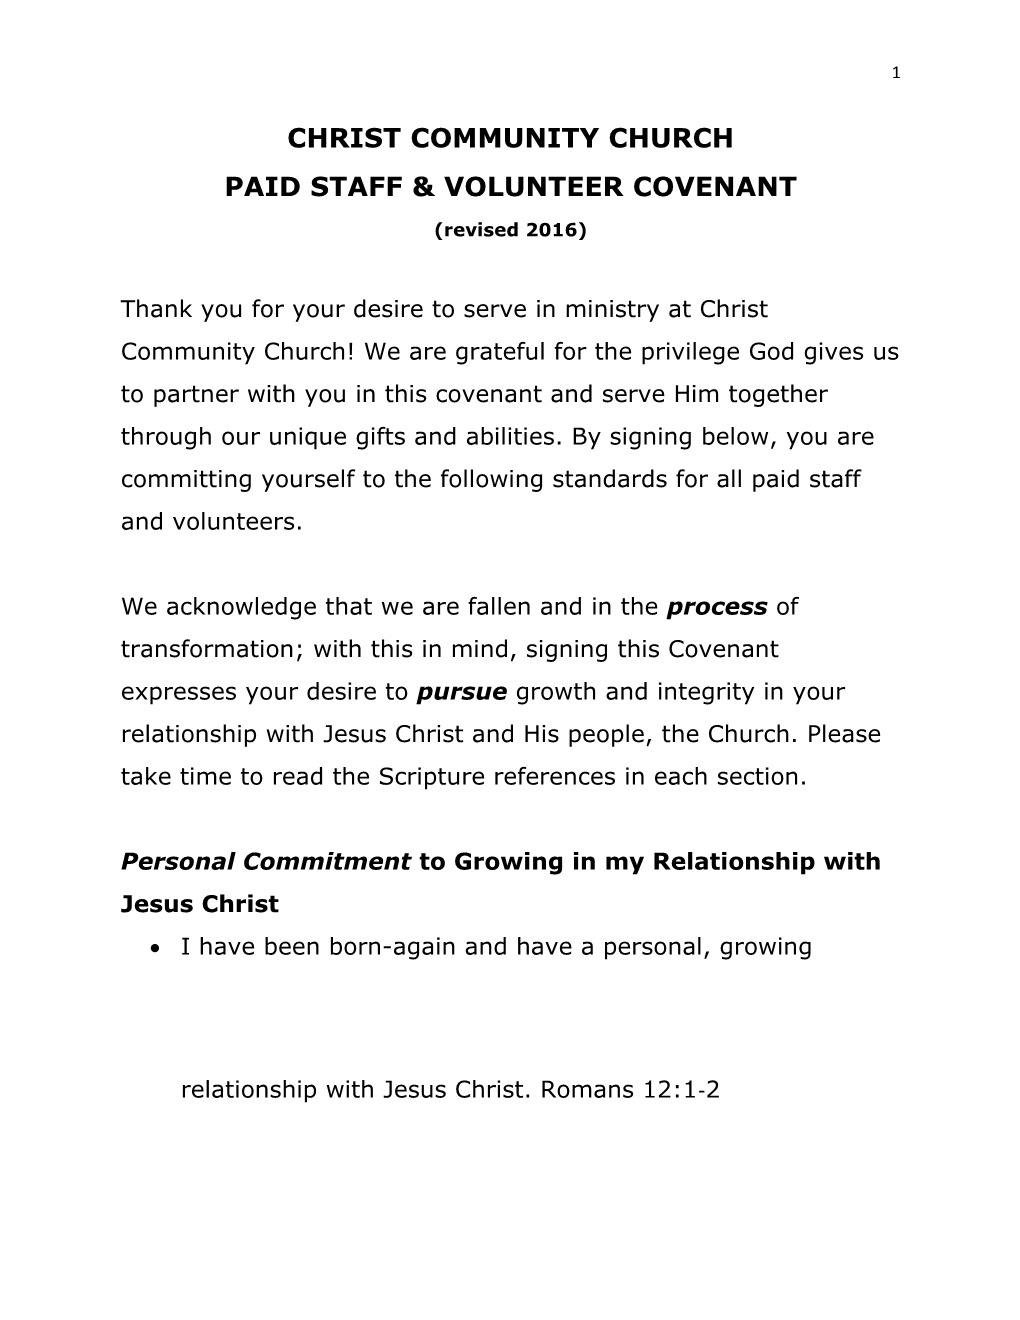 Paid Staff & Volunteer Covenant